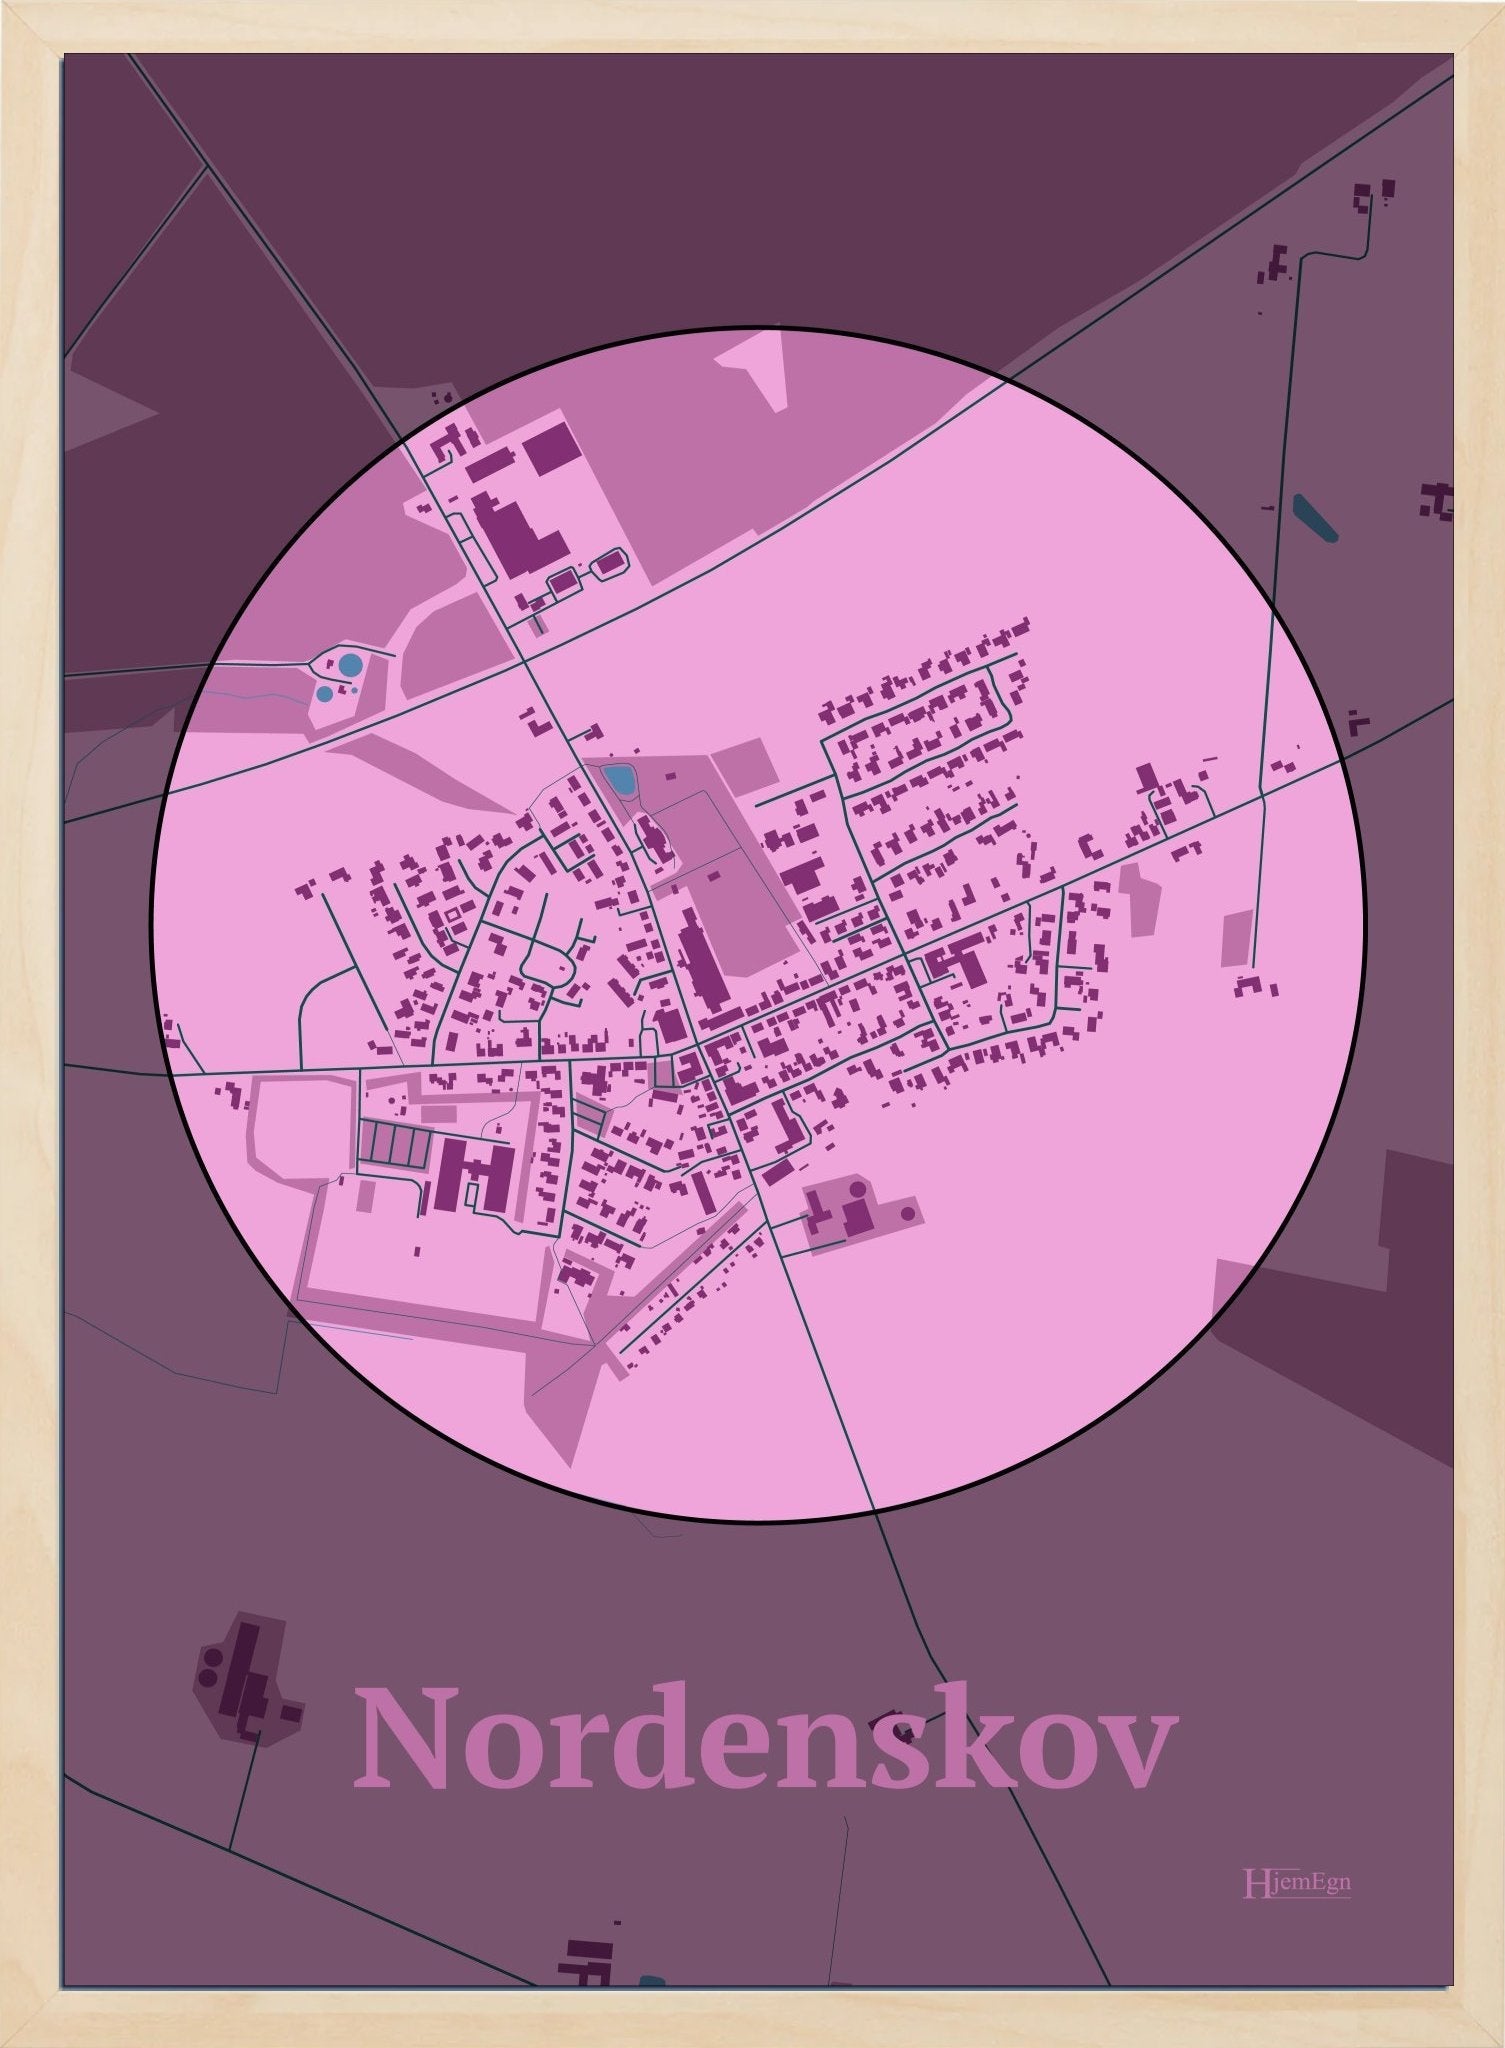 Nordenskov plakat i farve pastel rød og HjemEgn.dk design centrum. Design bykort for Nordenskov